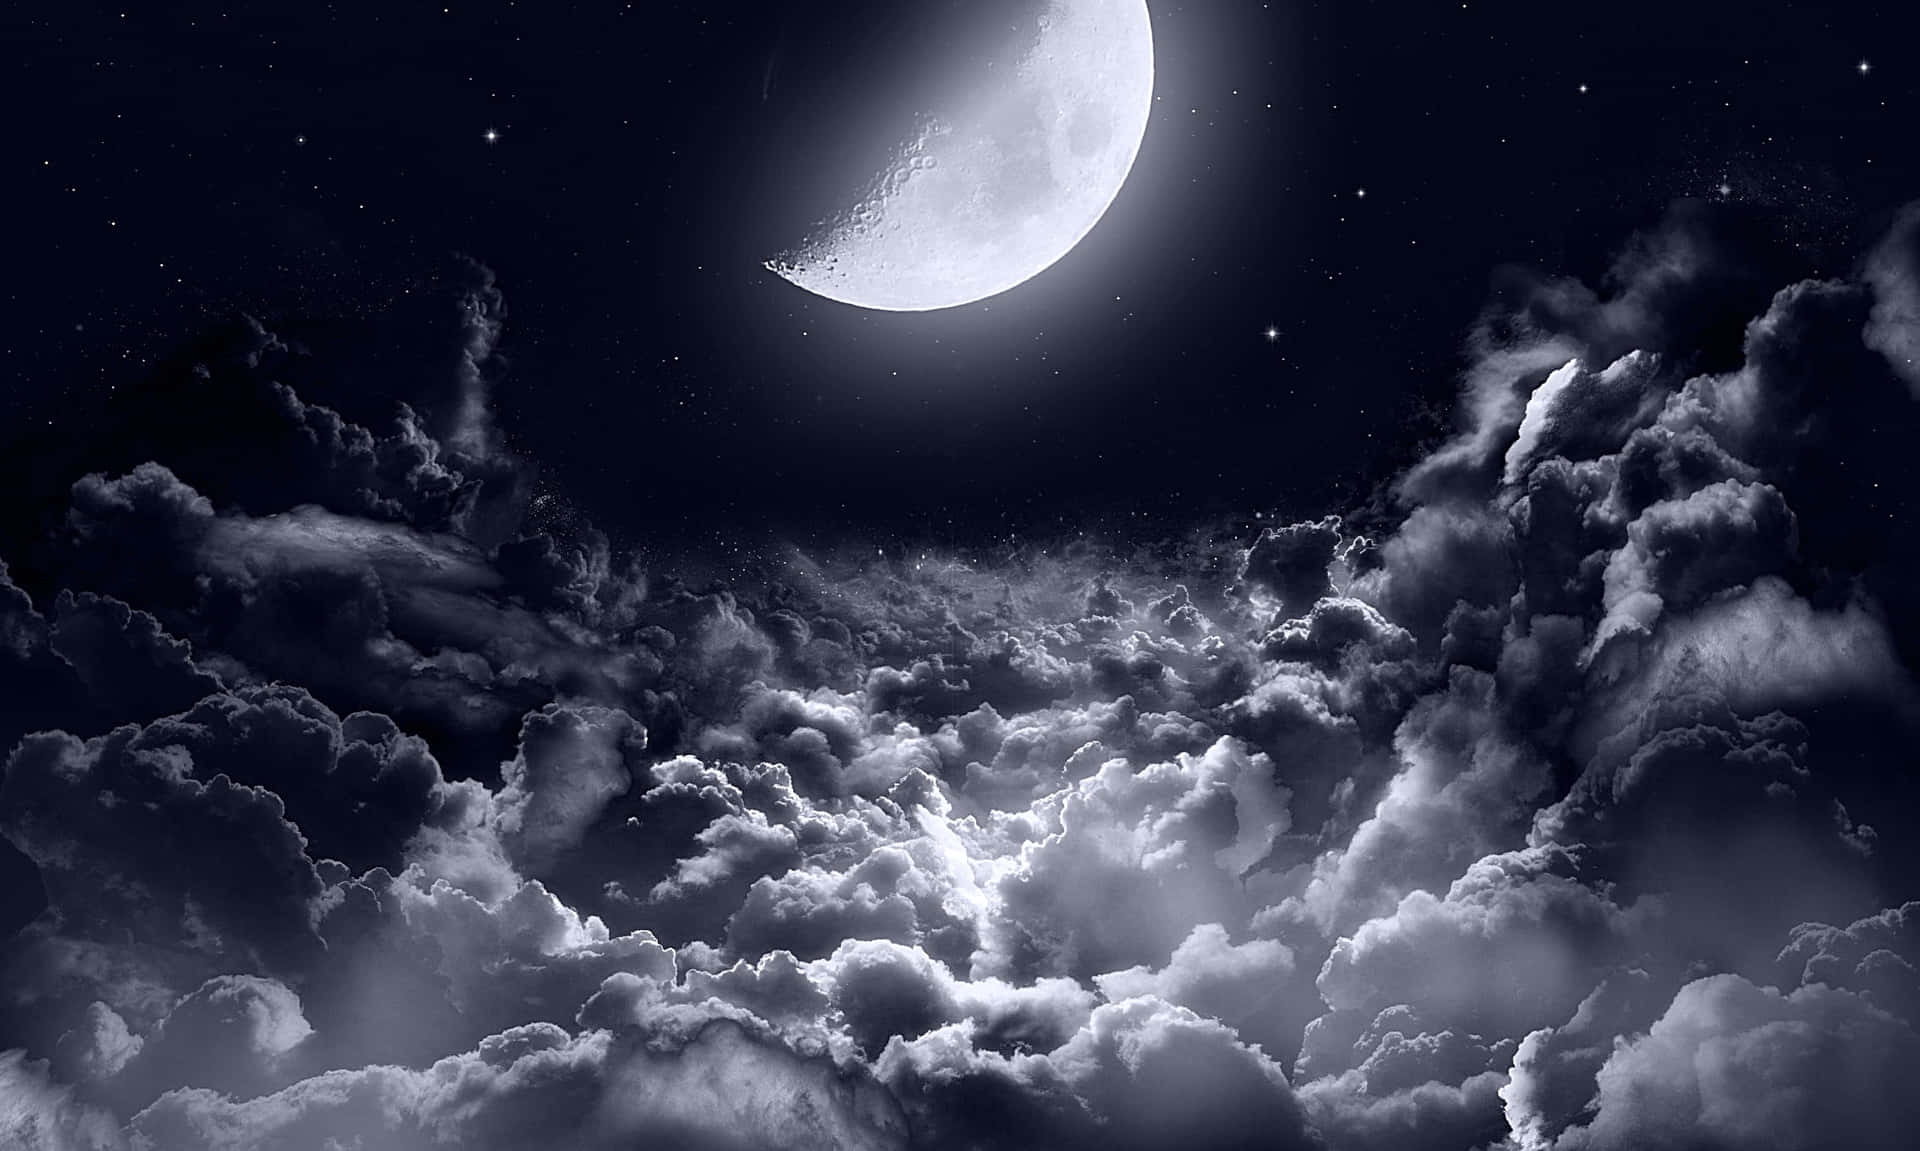 "Experience Magic of a Lunar Night"